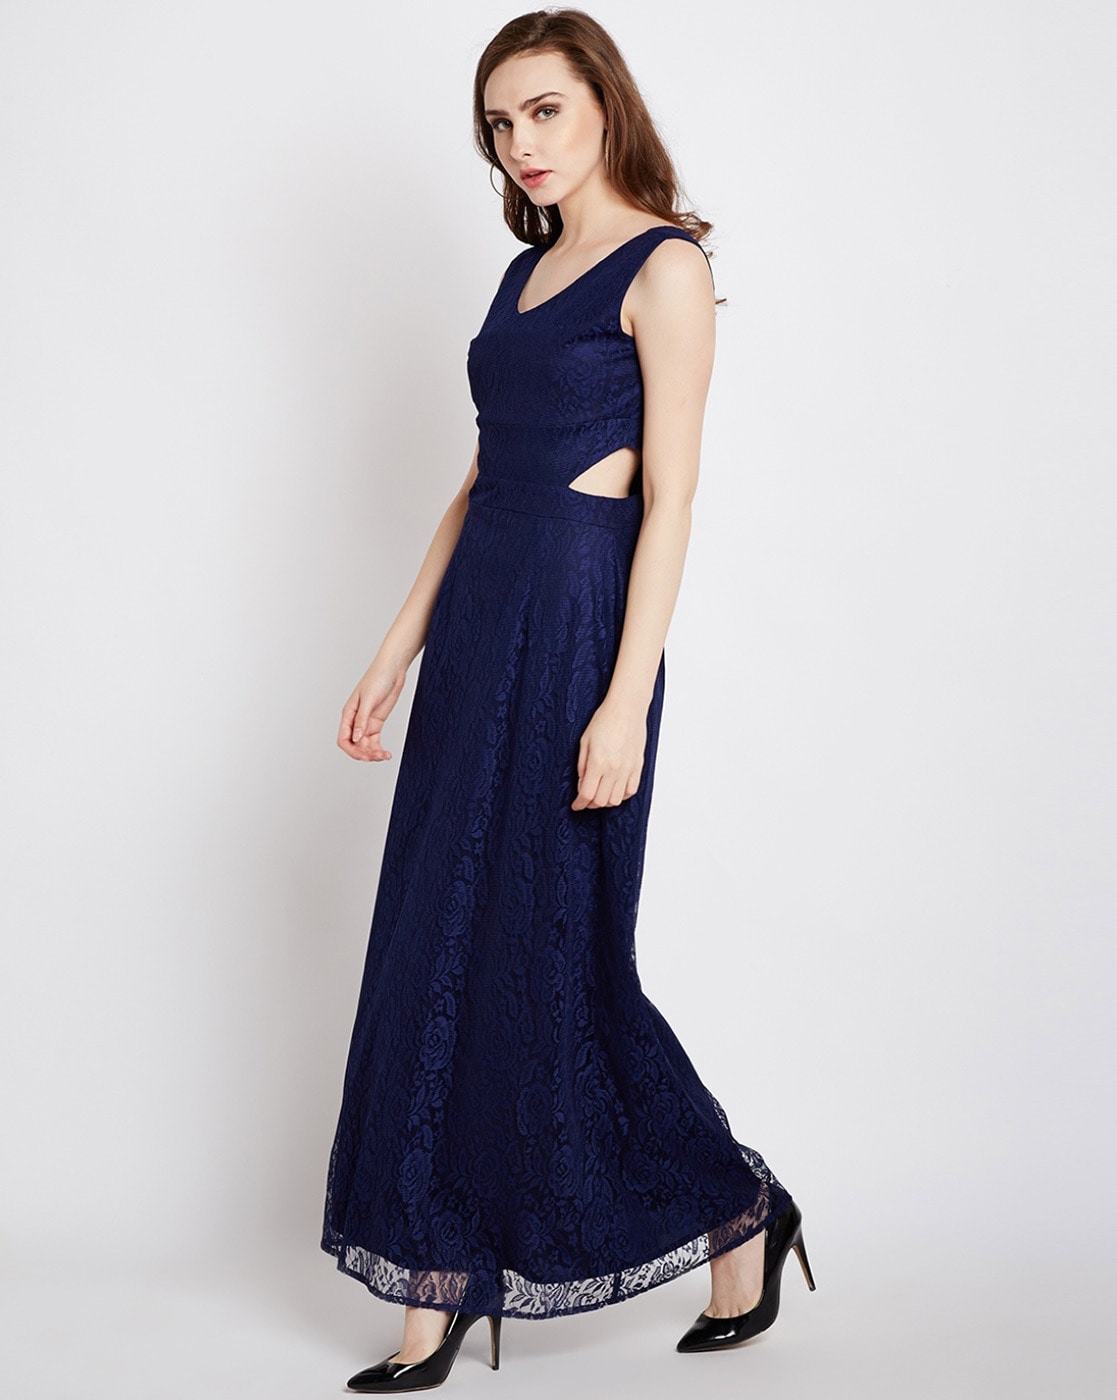 Dark Teal Blue Single Sleeve Embellished Gown | Embellished gown, Gowns,  Dress design patterns